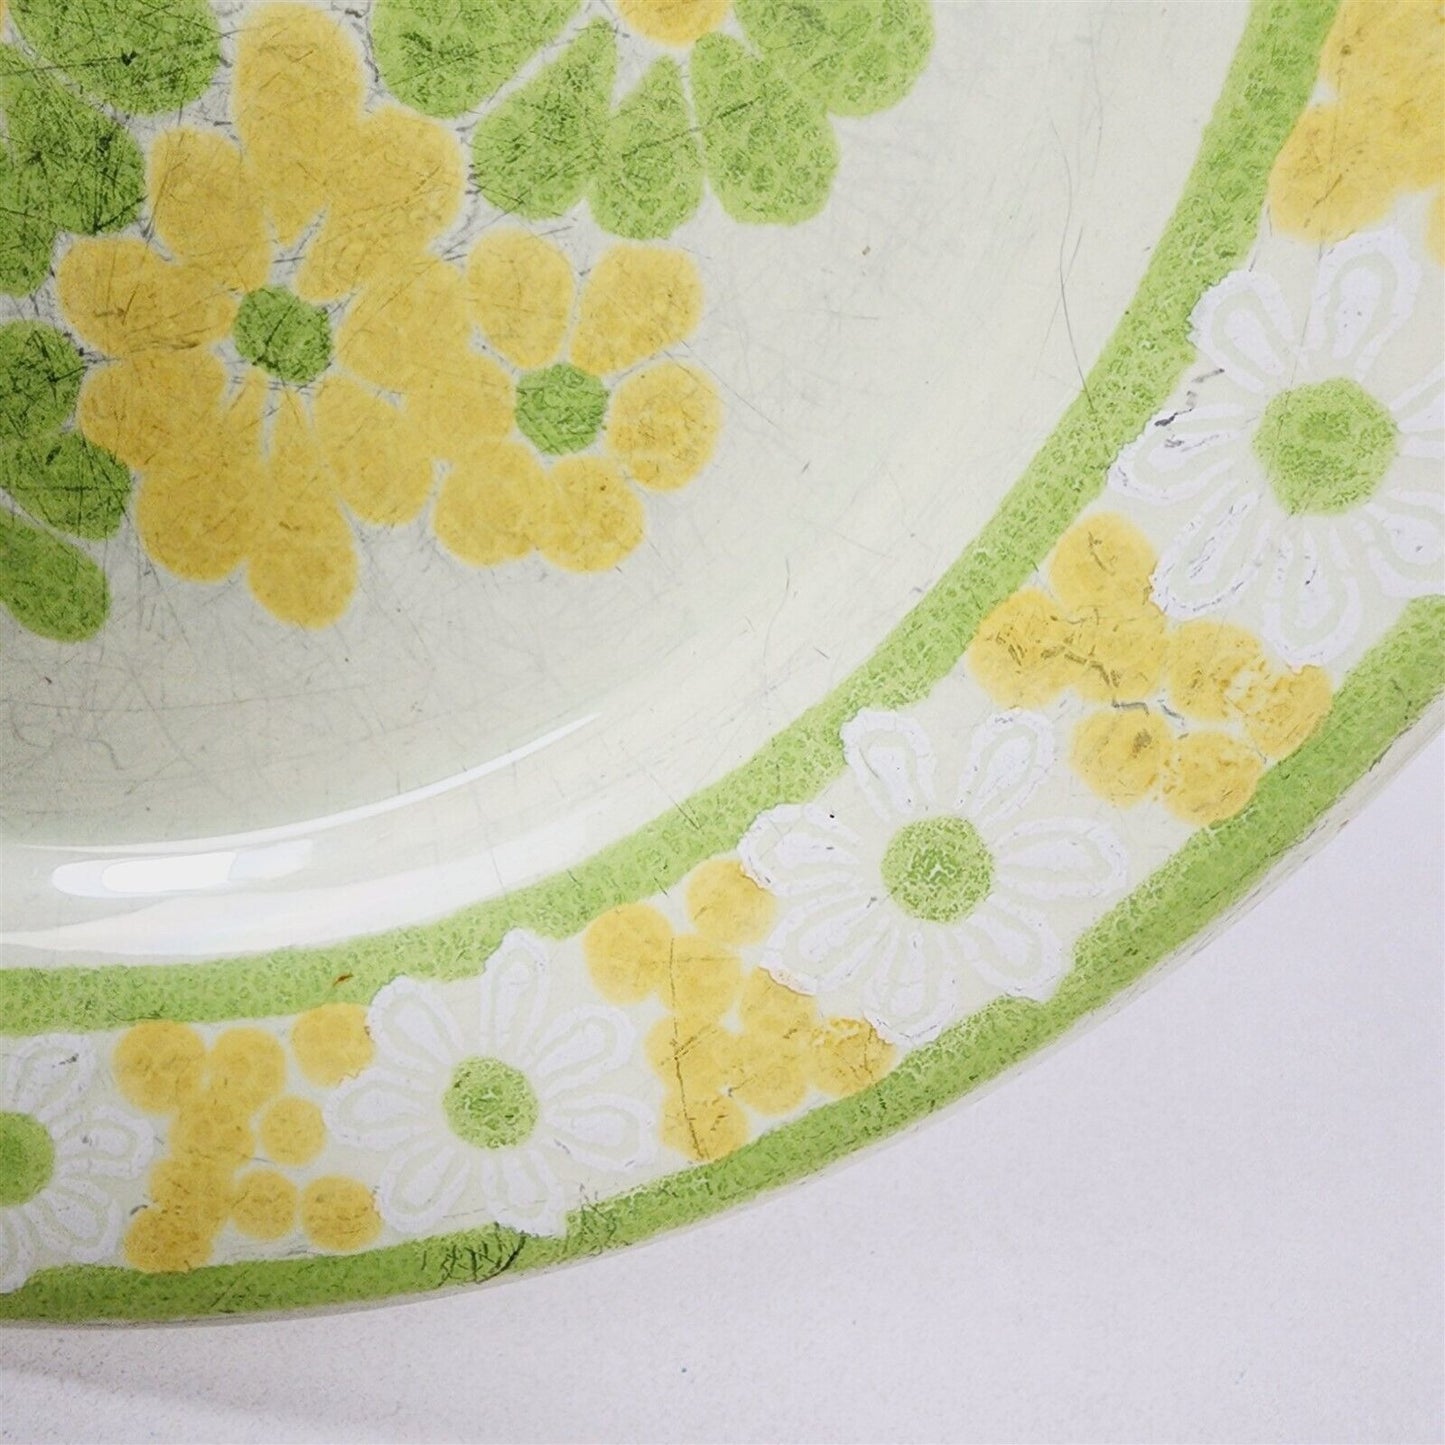 Vintage Franciscan Earthenware Picnic Green Yellow Floral Plates & Salt Shaker